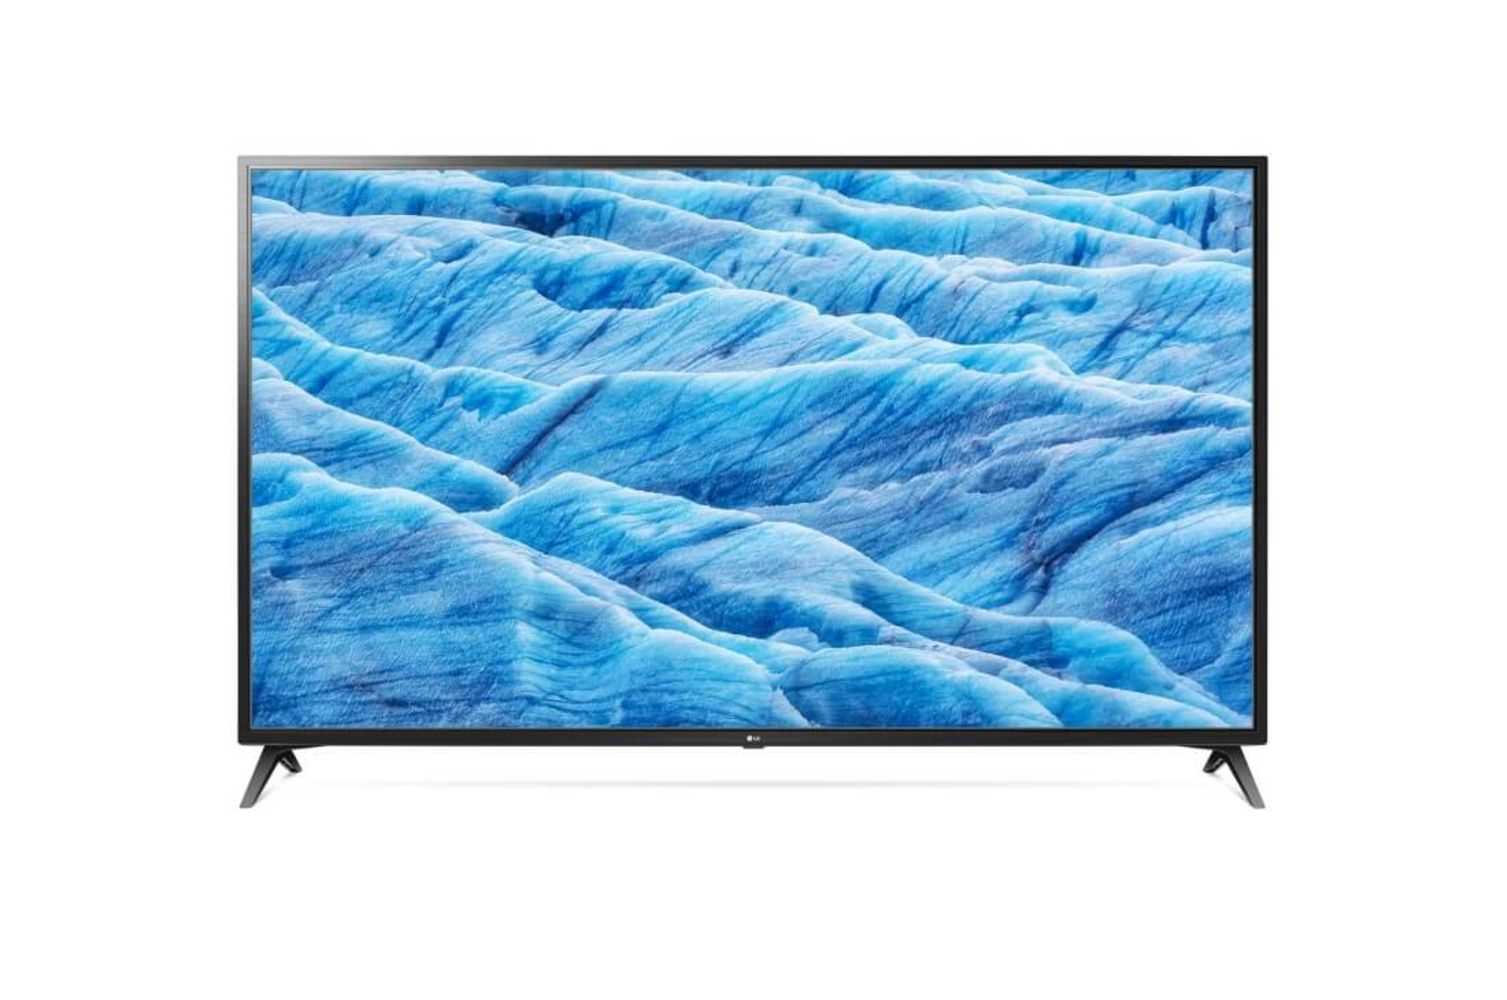 LG TVs - Including 4K UHD Smart TVs In A Range Of Sizes